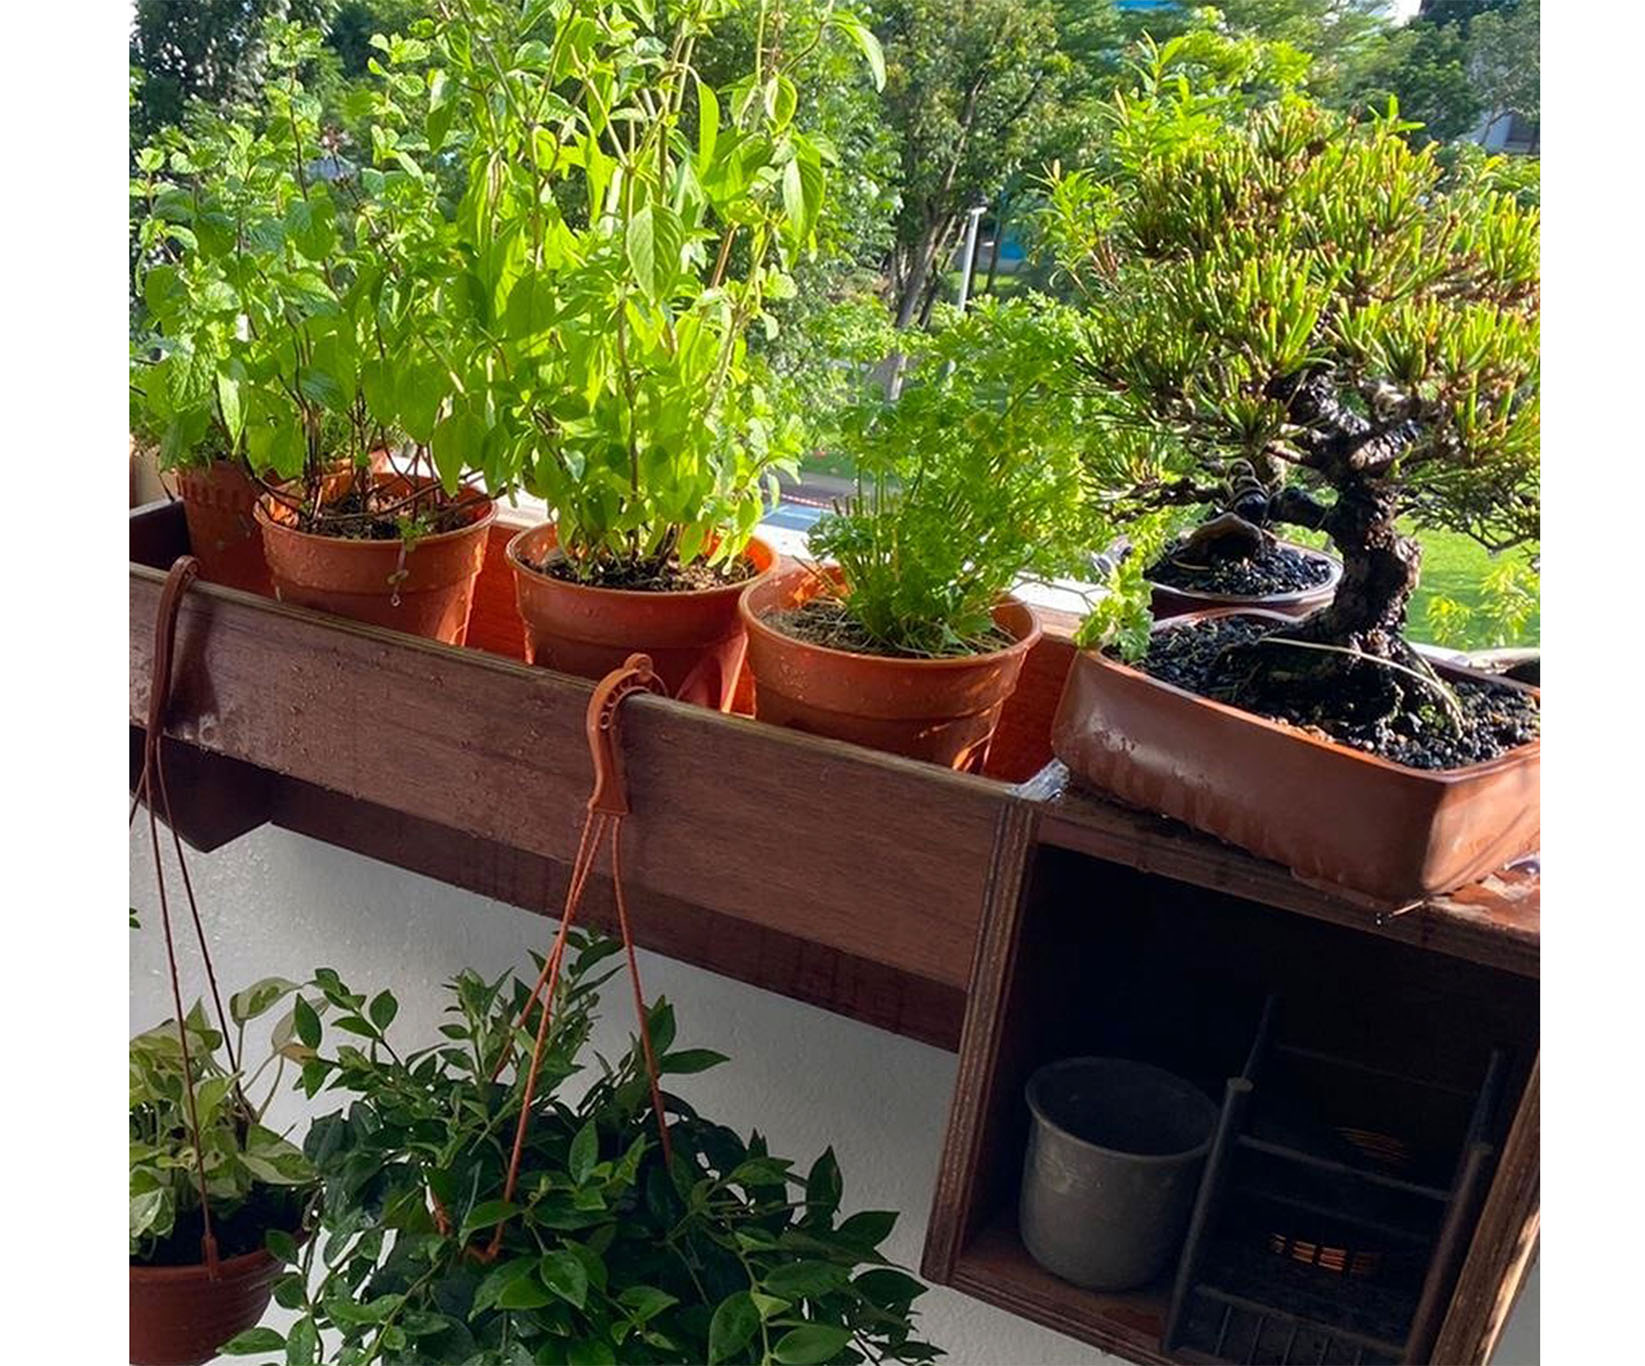 Uncommon Goods Singapore builds a custom bonsai wall planter